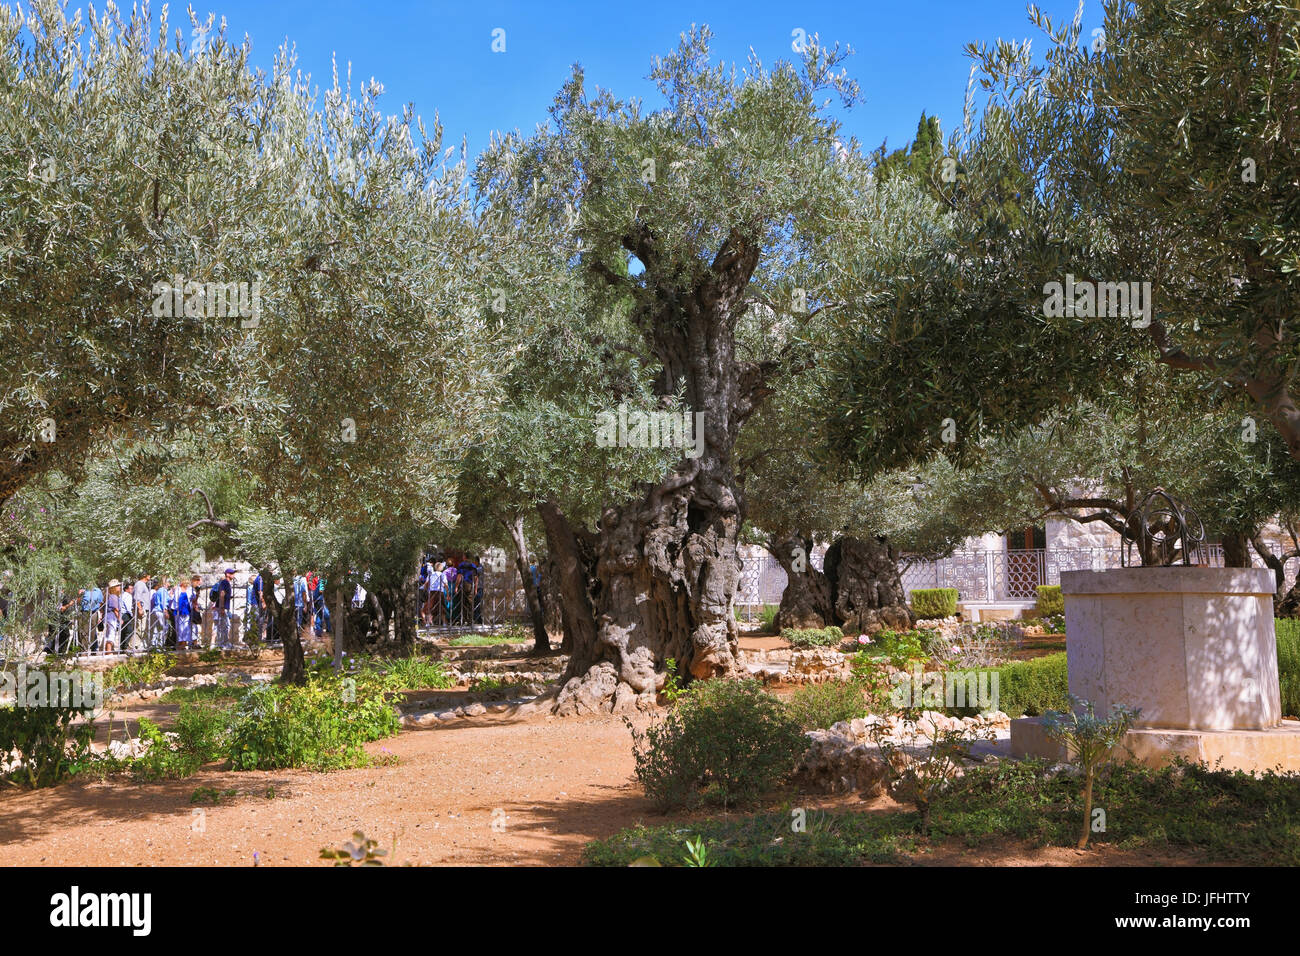 Bustling walking tour in Garden of Gethsemane Stock Photo